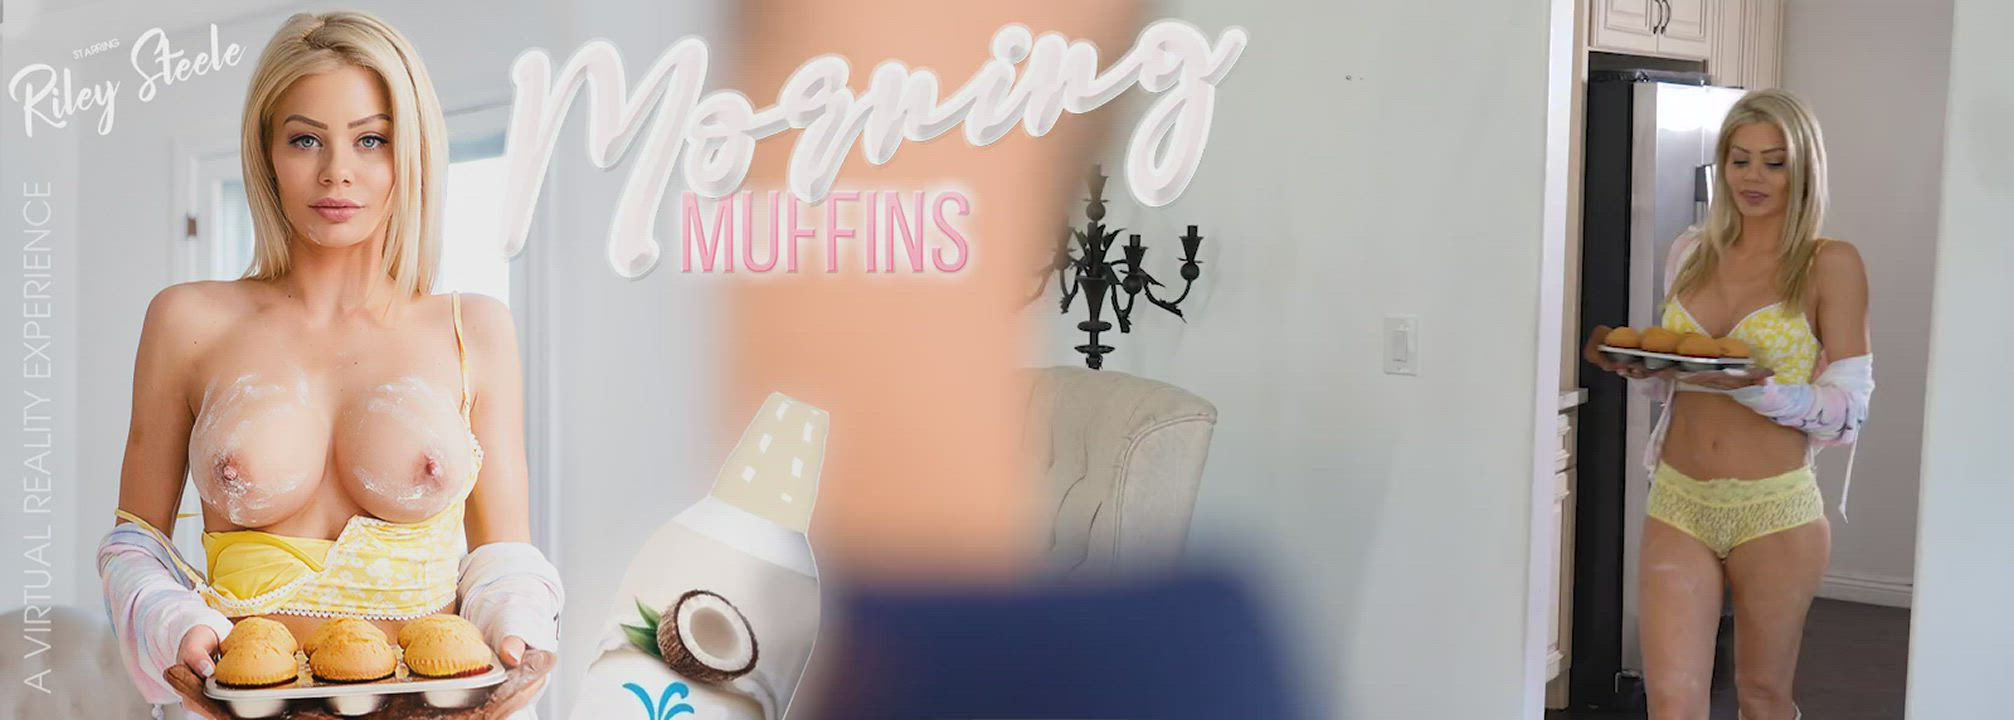 Morning Muffins